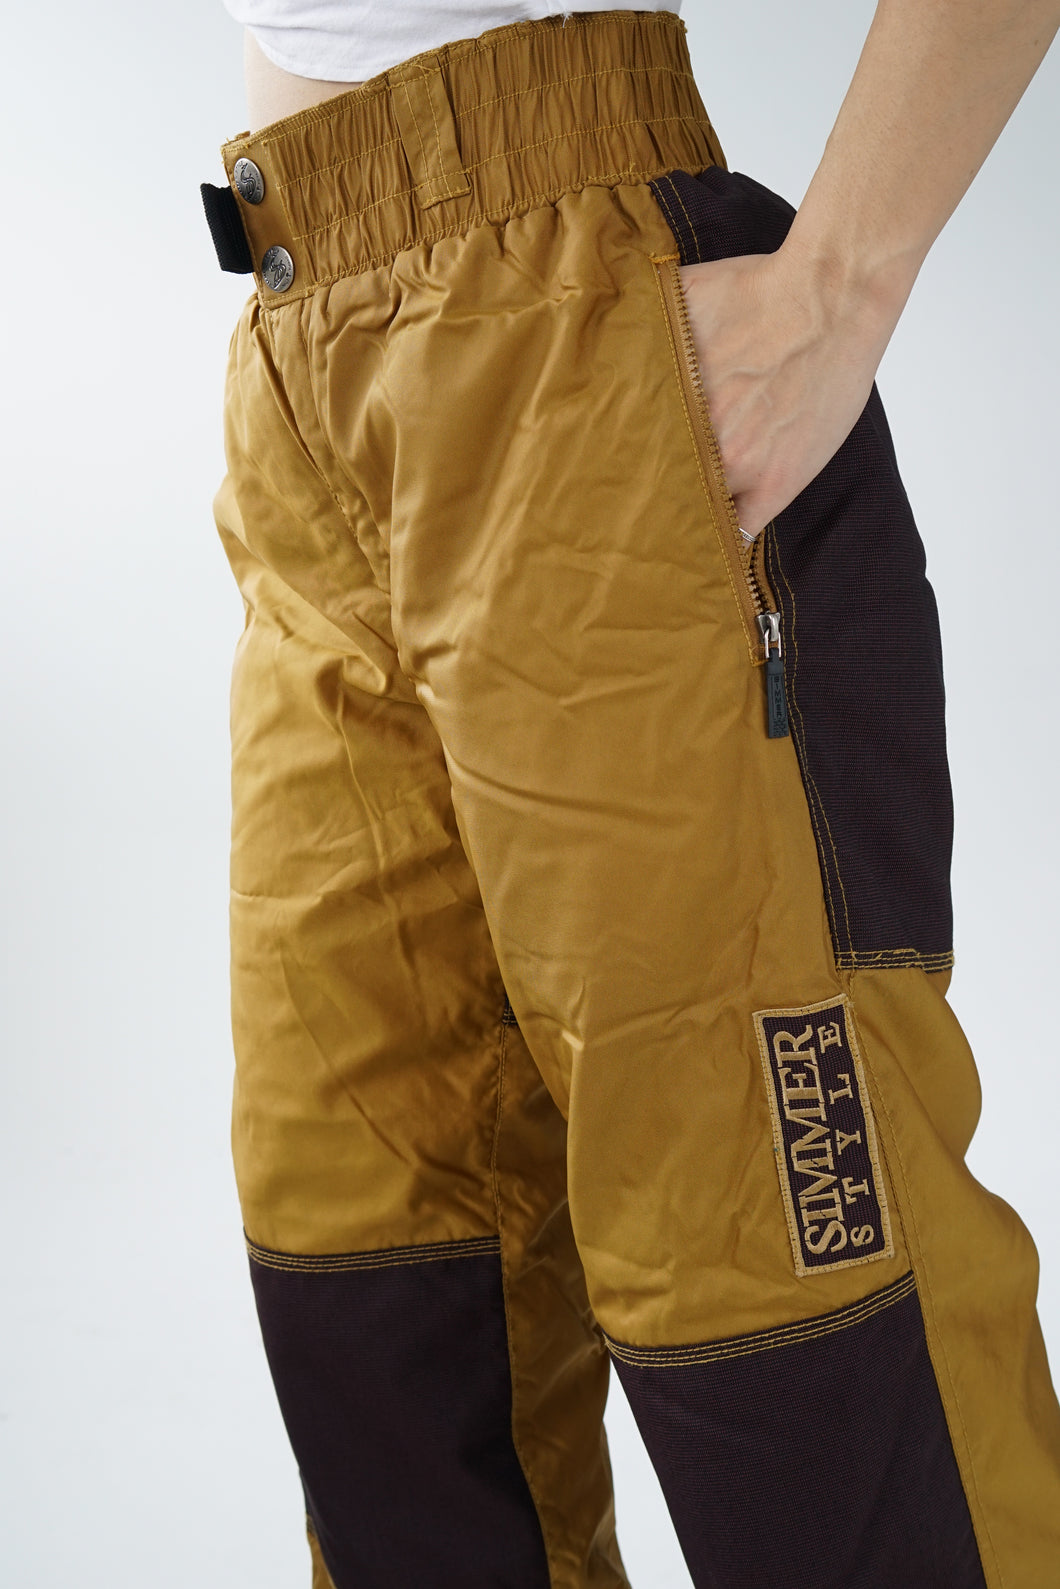 Vintage golden snow pants with patches unisex size S-M